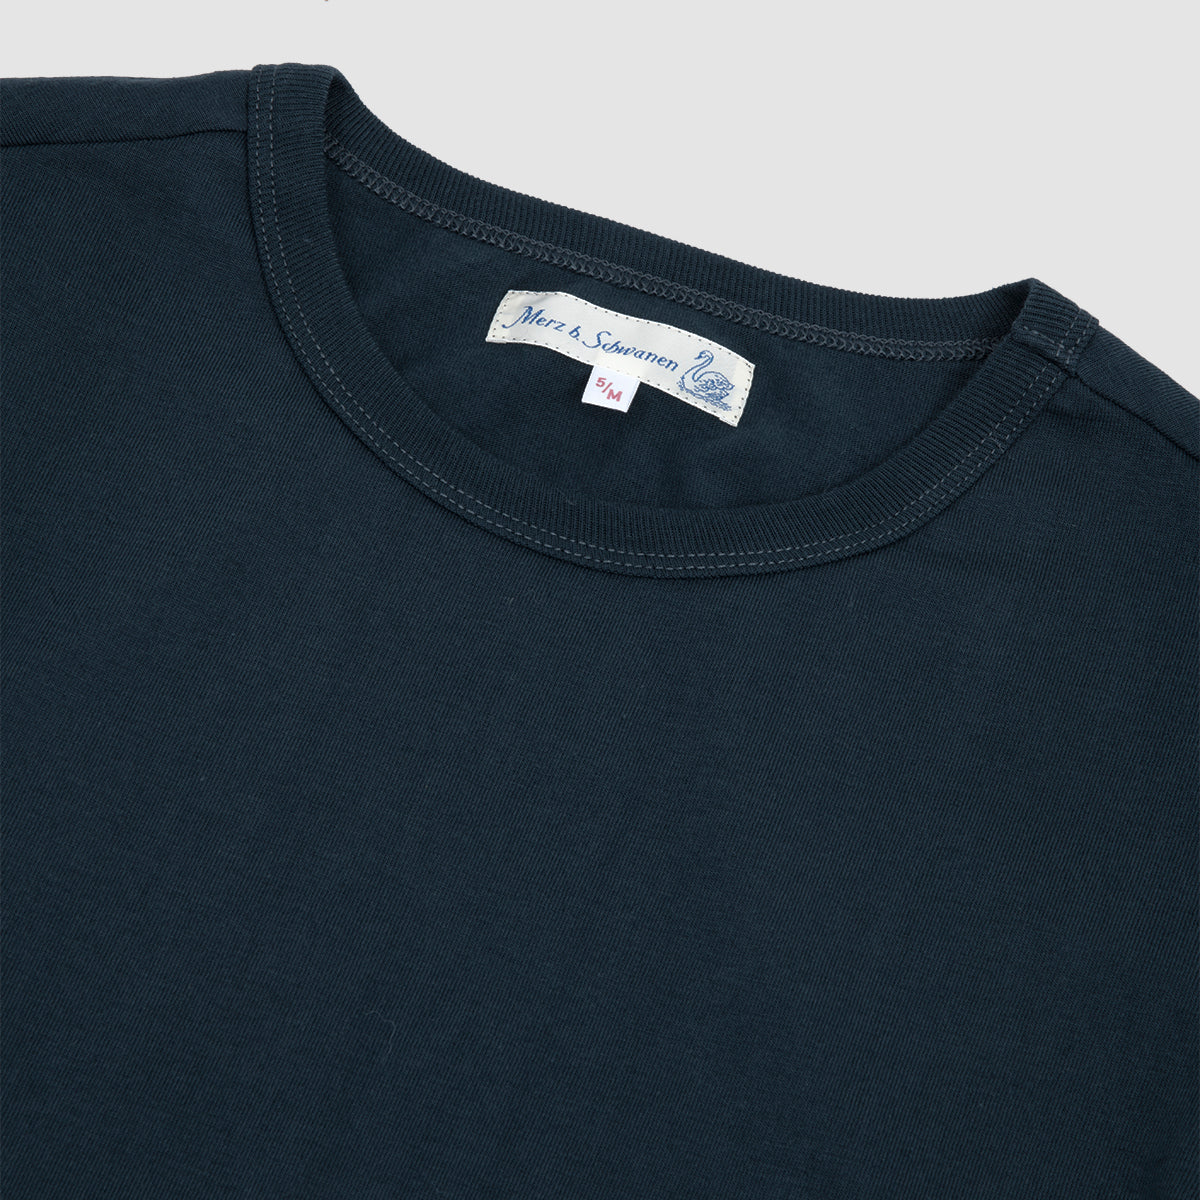 1950s Short Sleeve Crew Neck T-Shirt - Mineral Blue